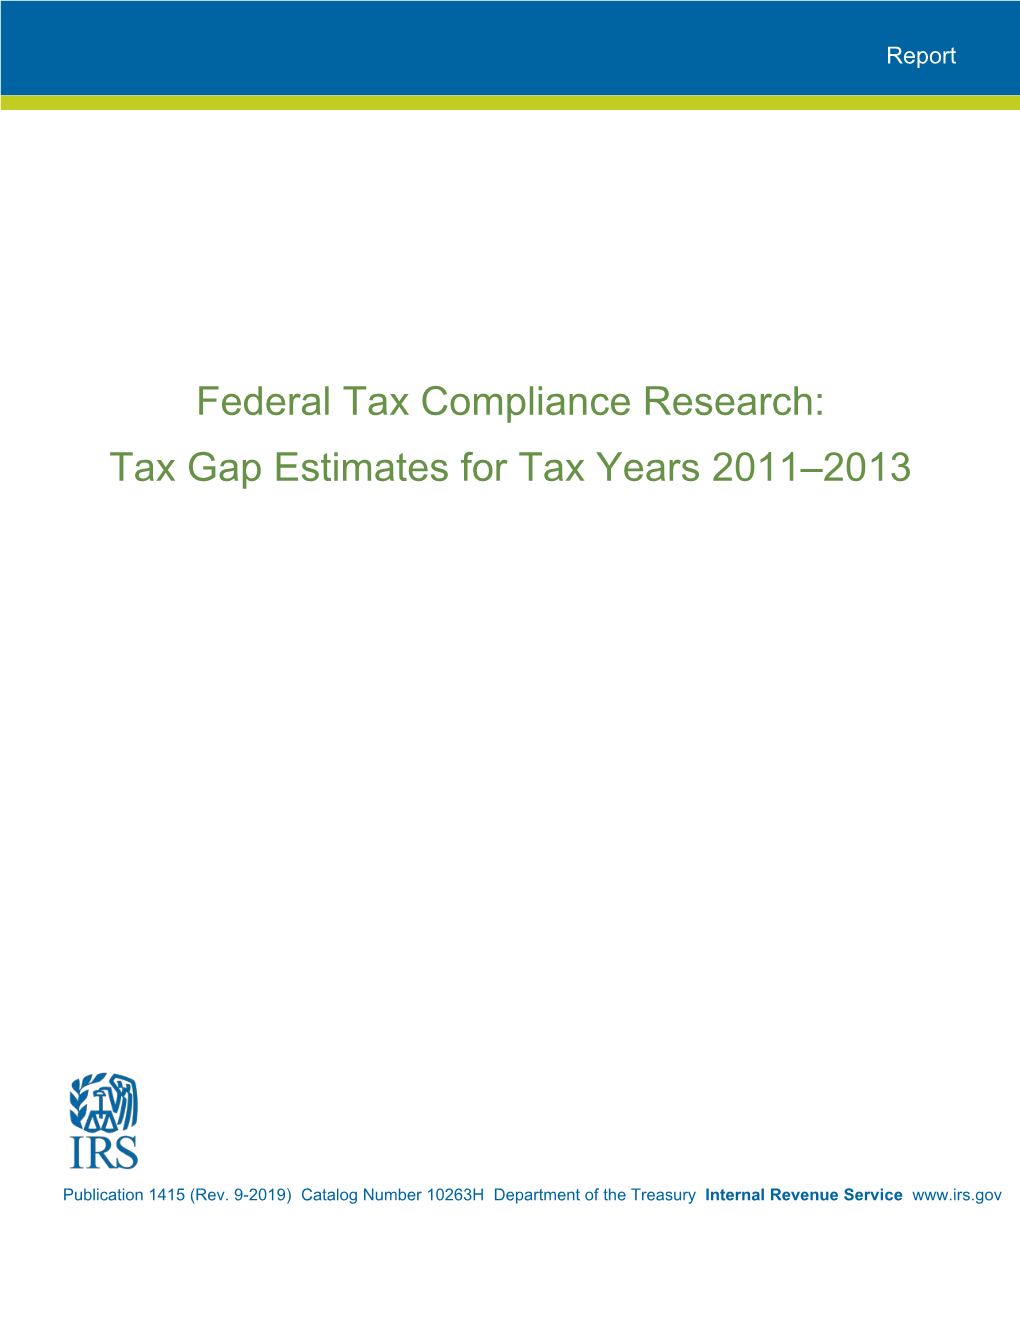 Tax Gap Estimates for Tax Years 2011–2013 (Publication 1415)